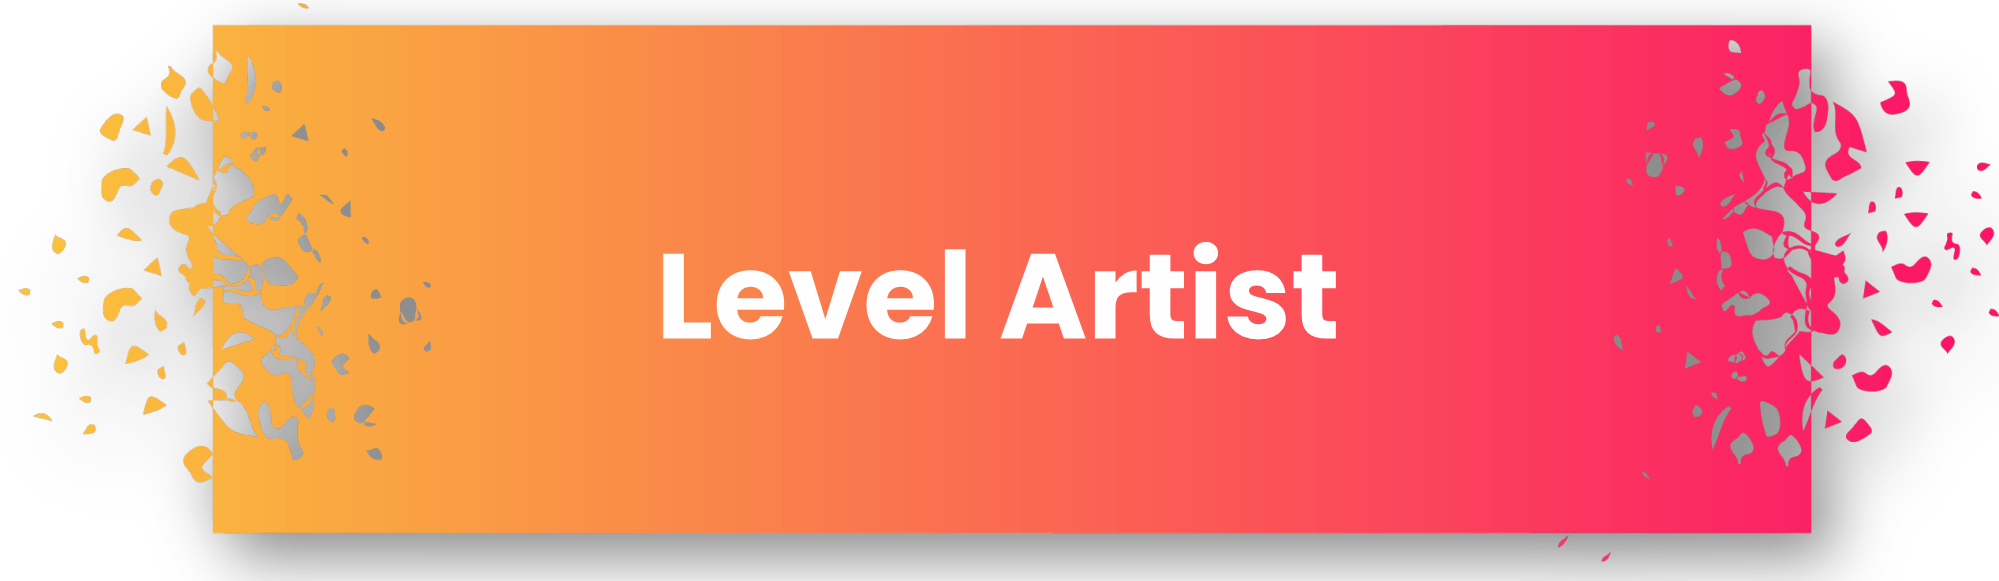 Level Artist